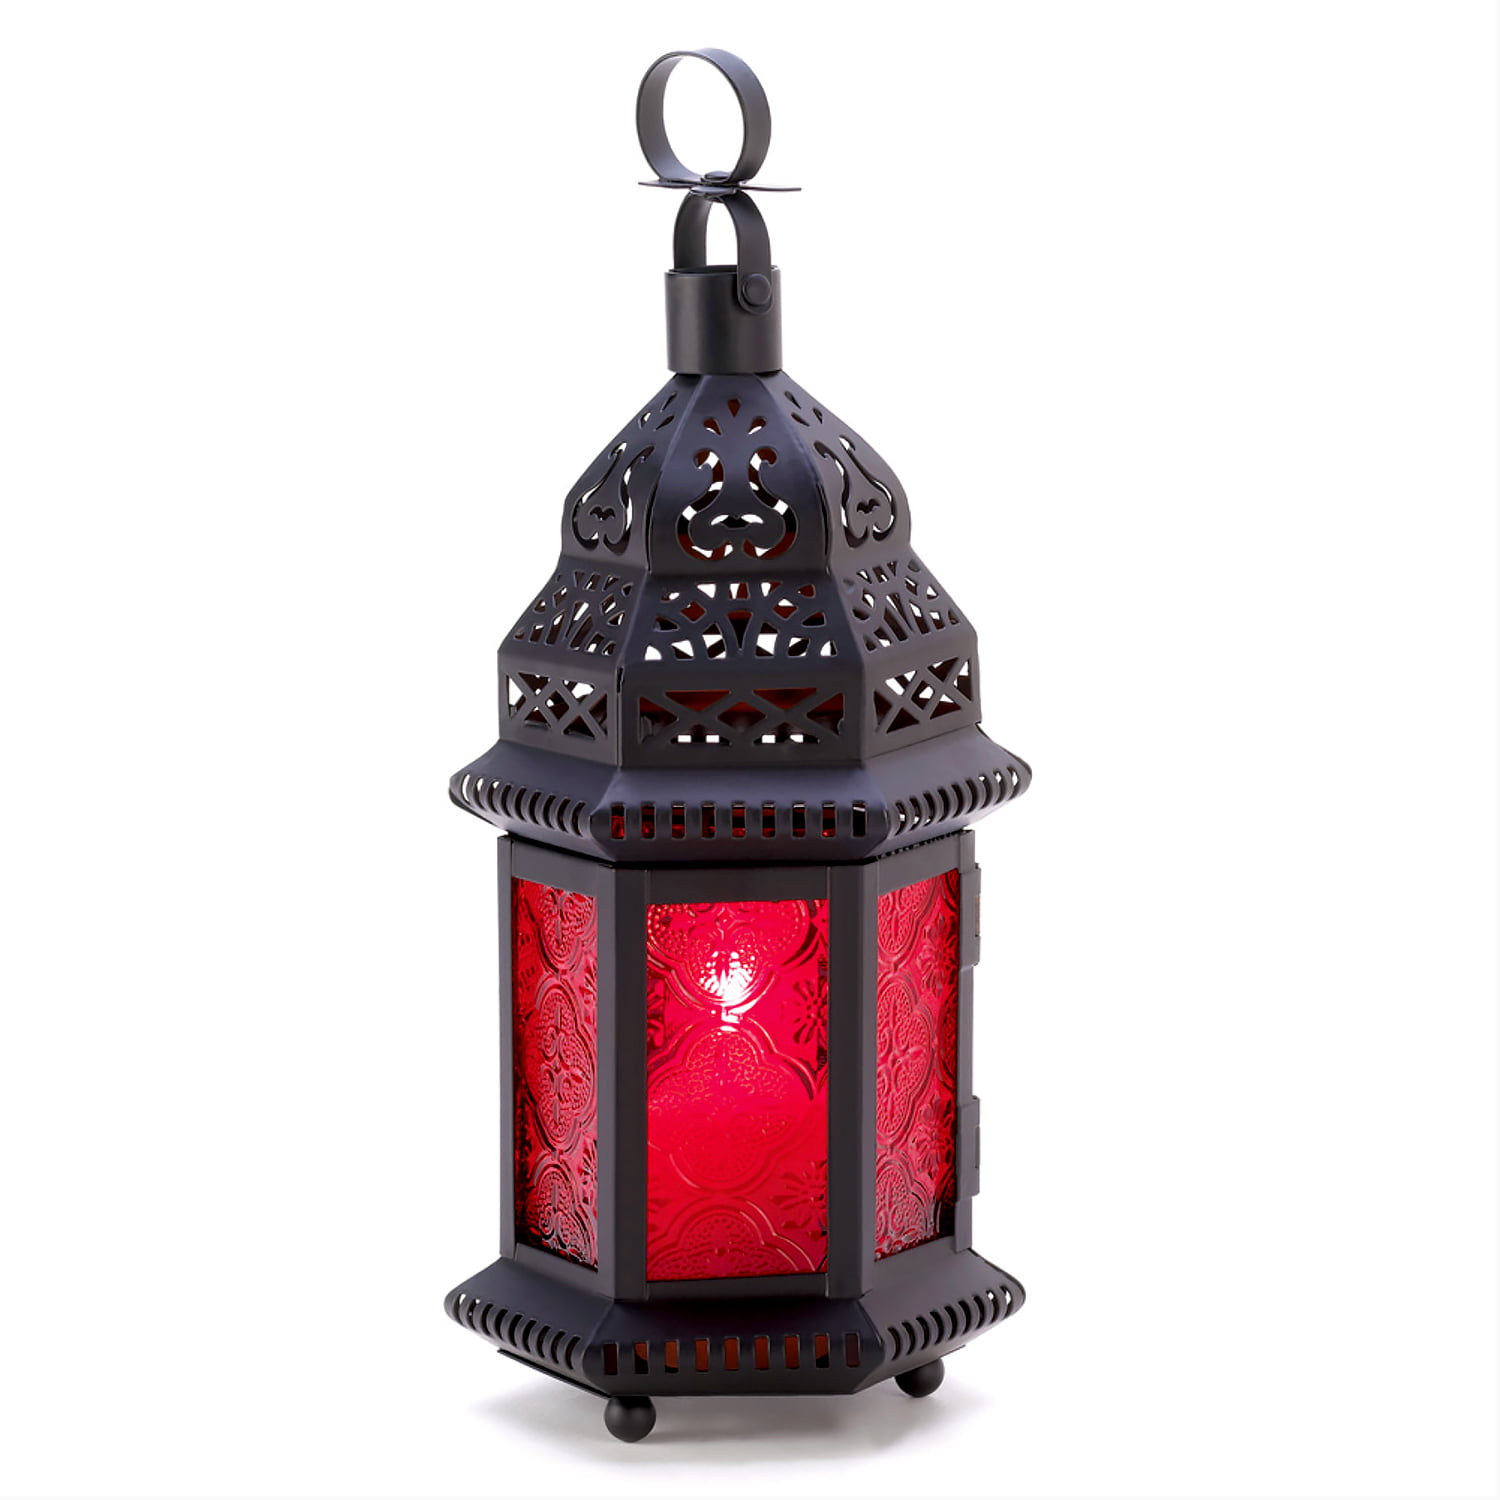 Iron Hanging/Stand Garden Decor Tealight Candle Holder Lantern Red Glass